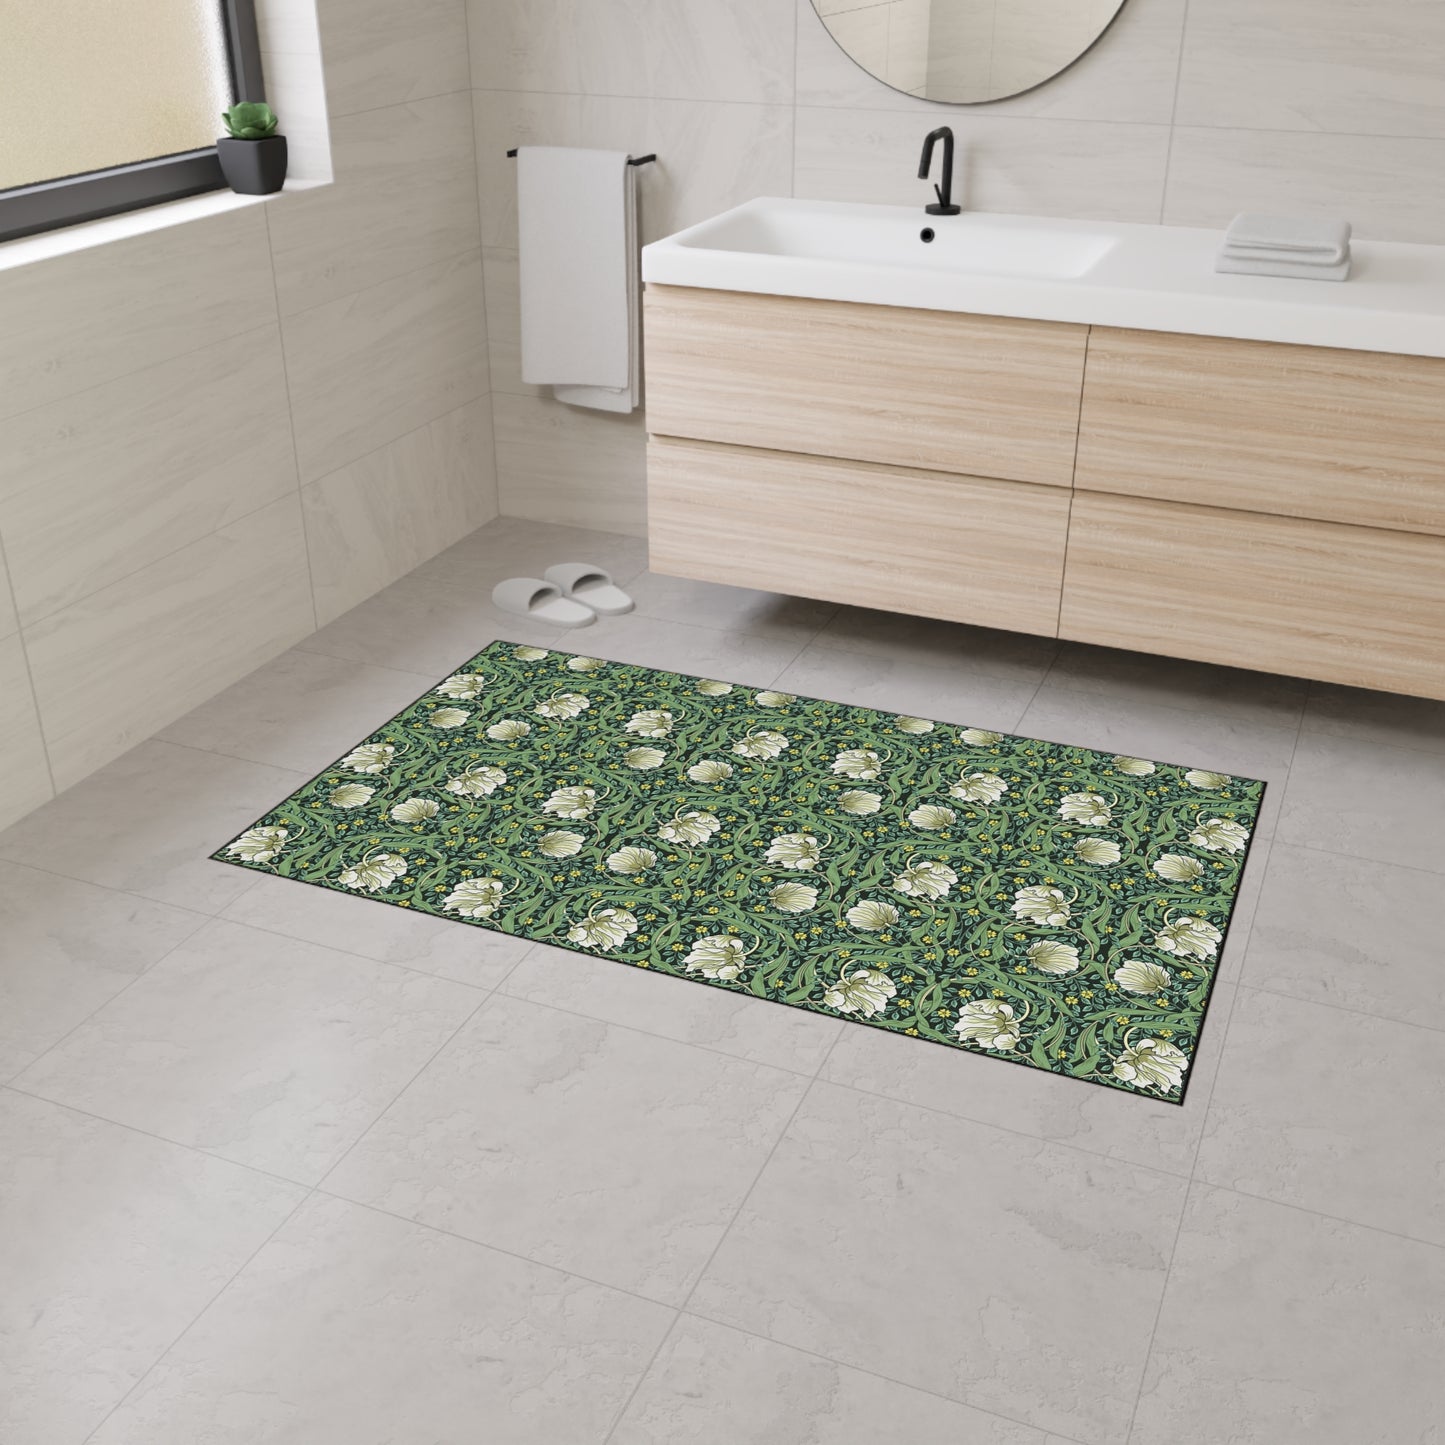 william-morris-co-heavy-duty-floor-mat-floor-mat-pimpernel-collection-green-16